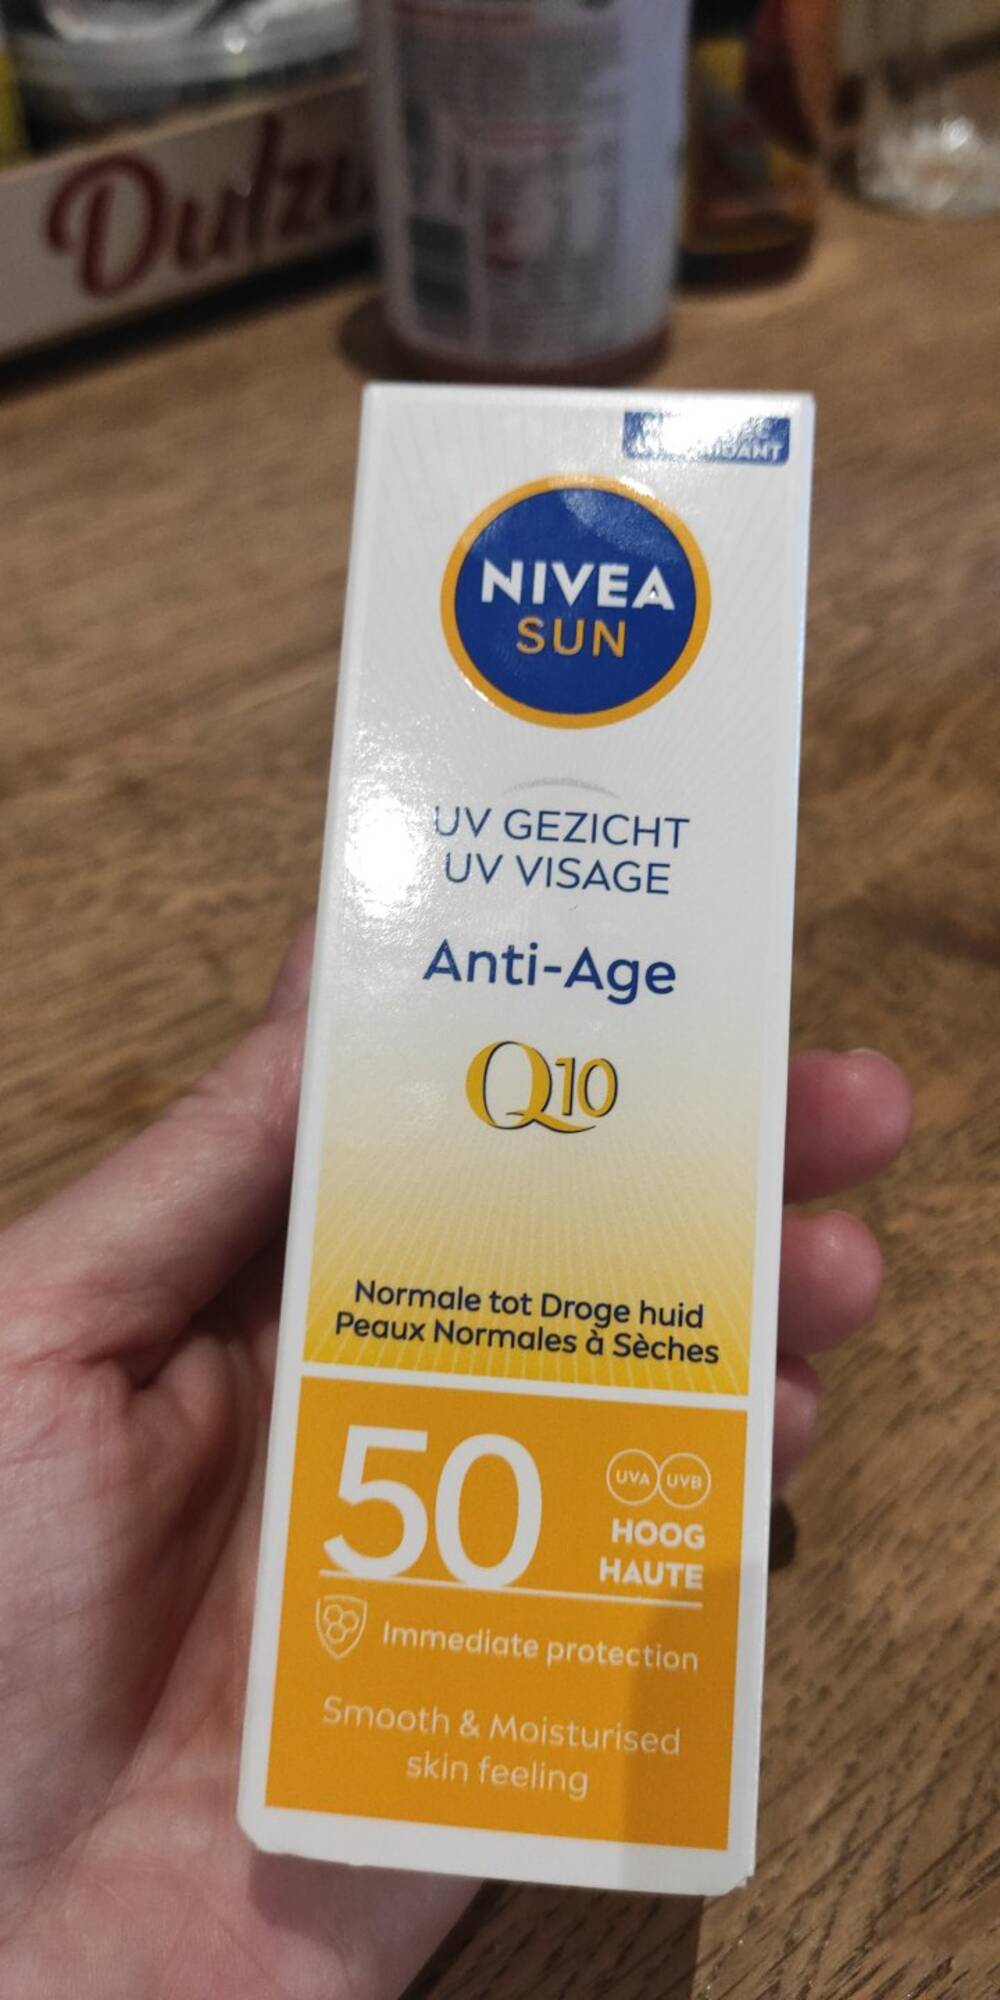 NIVEA SUN - UV visage anti-age fsp 50